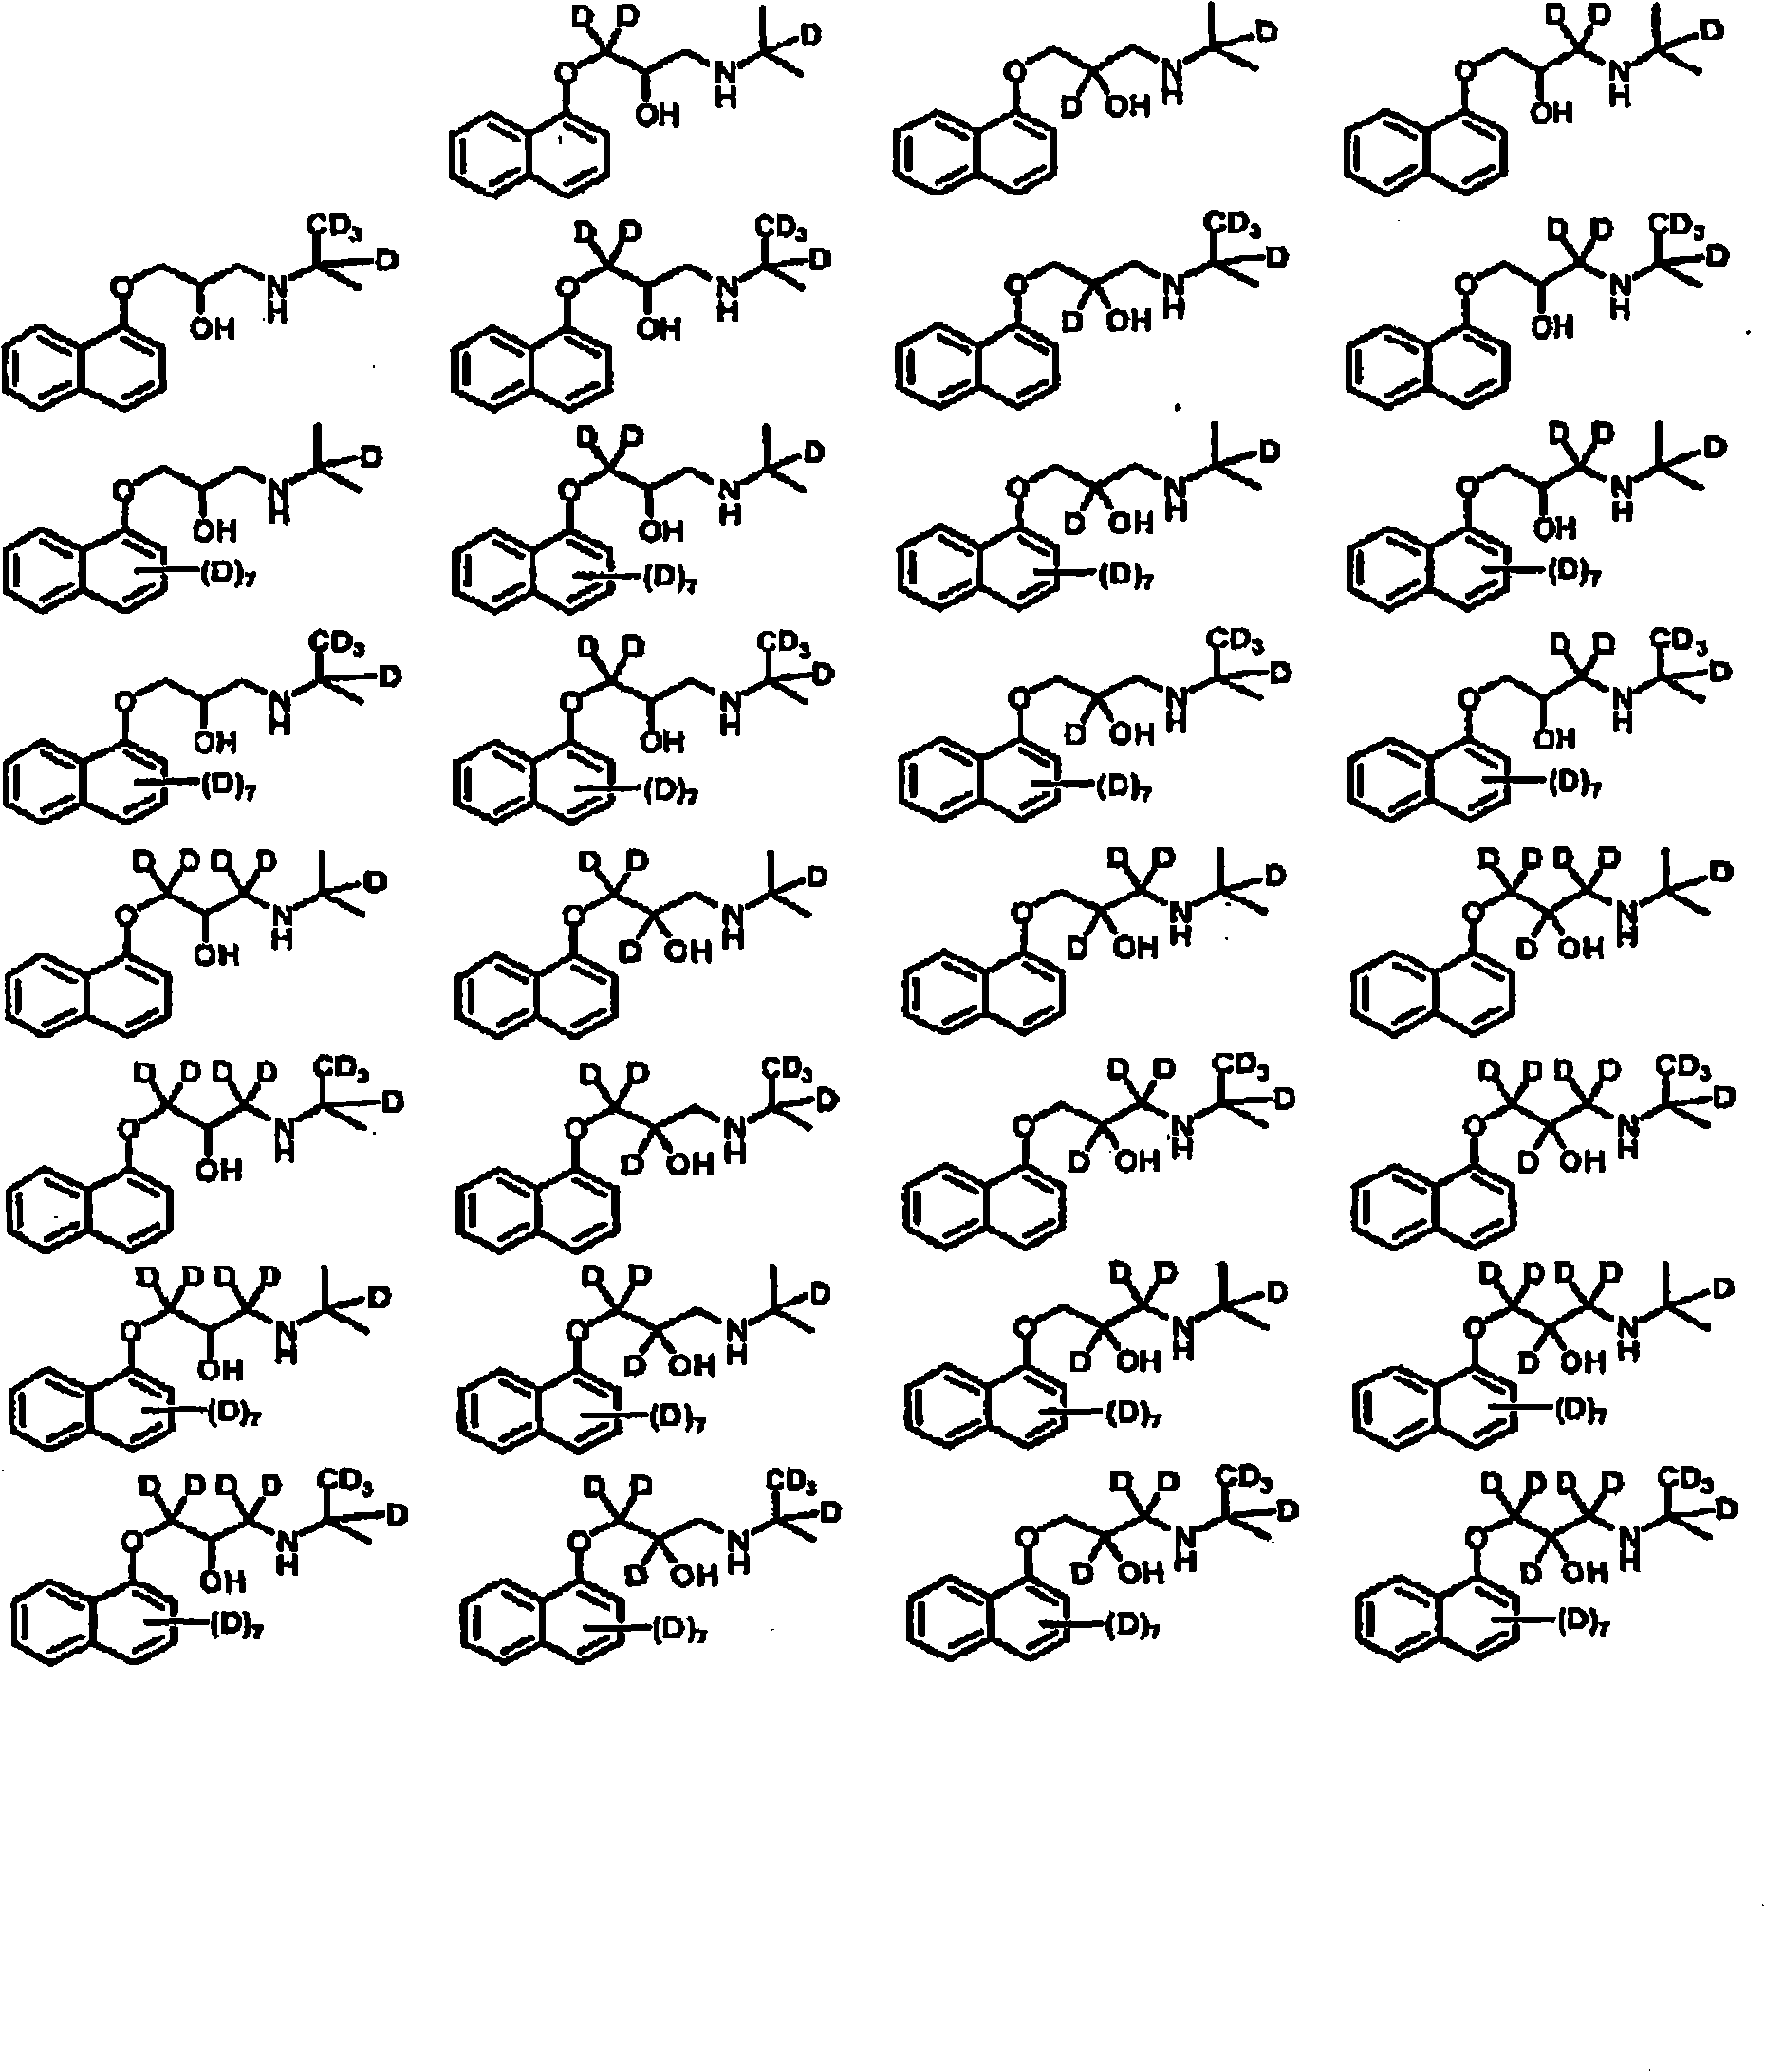 Deuterated aminoglycidyl compounds